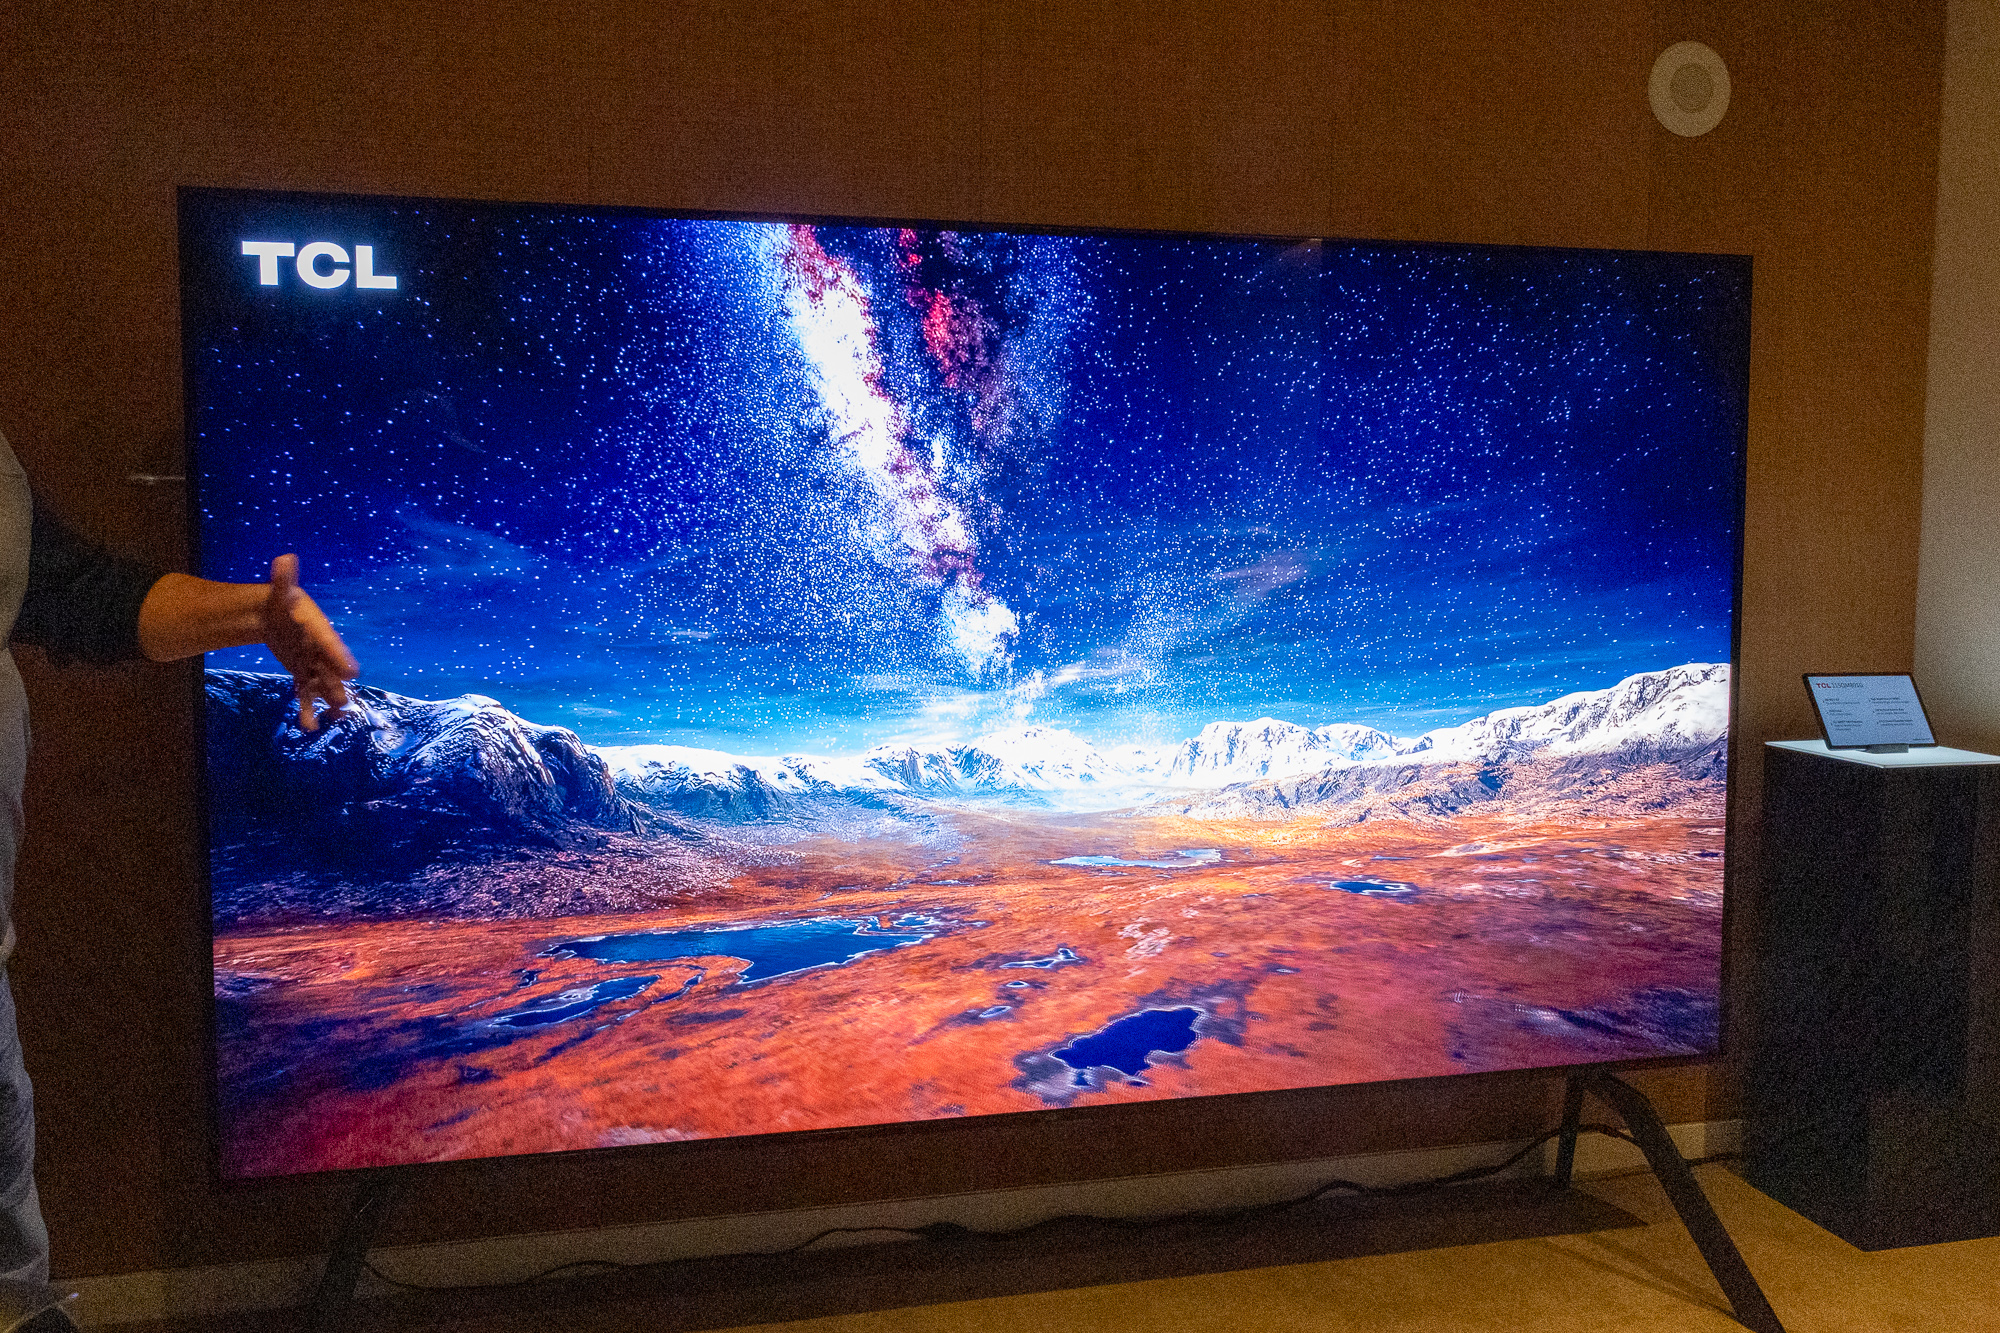 TCL's giant QM89 is the world's largest 4K mini-LED TV